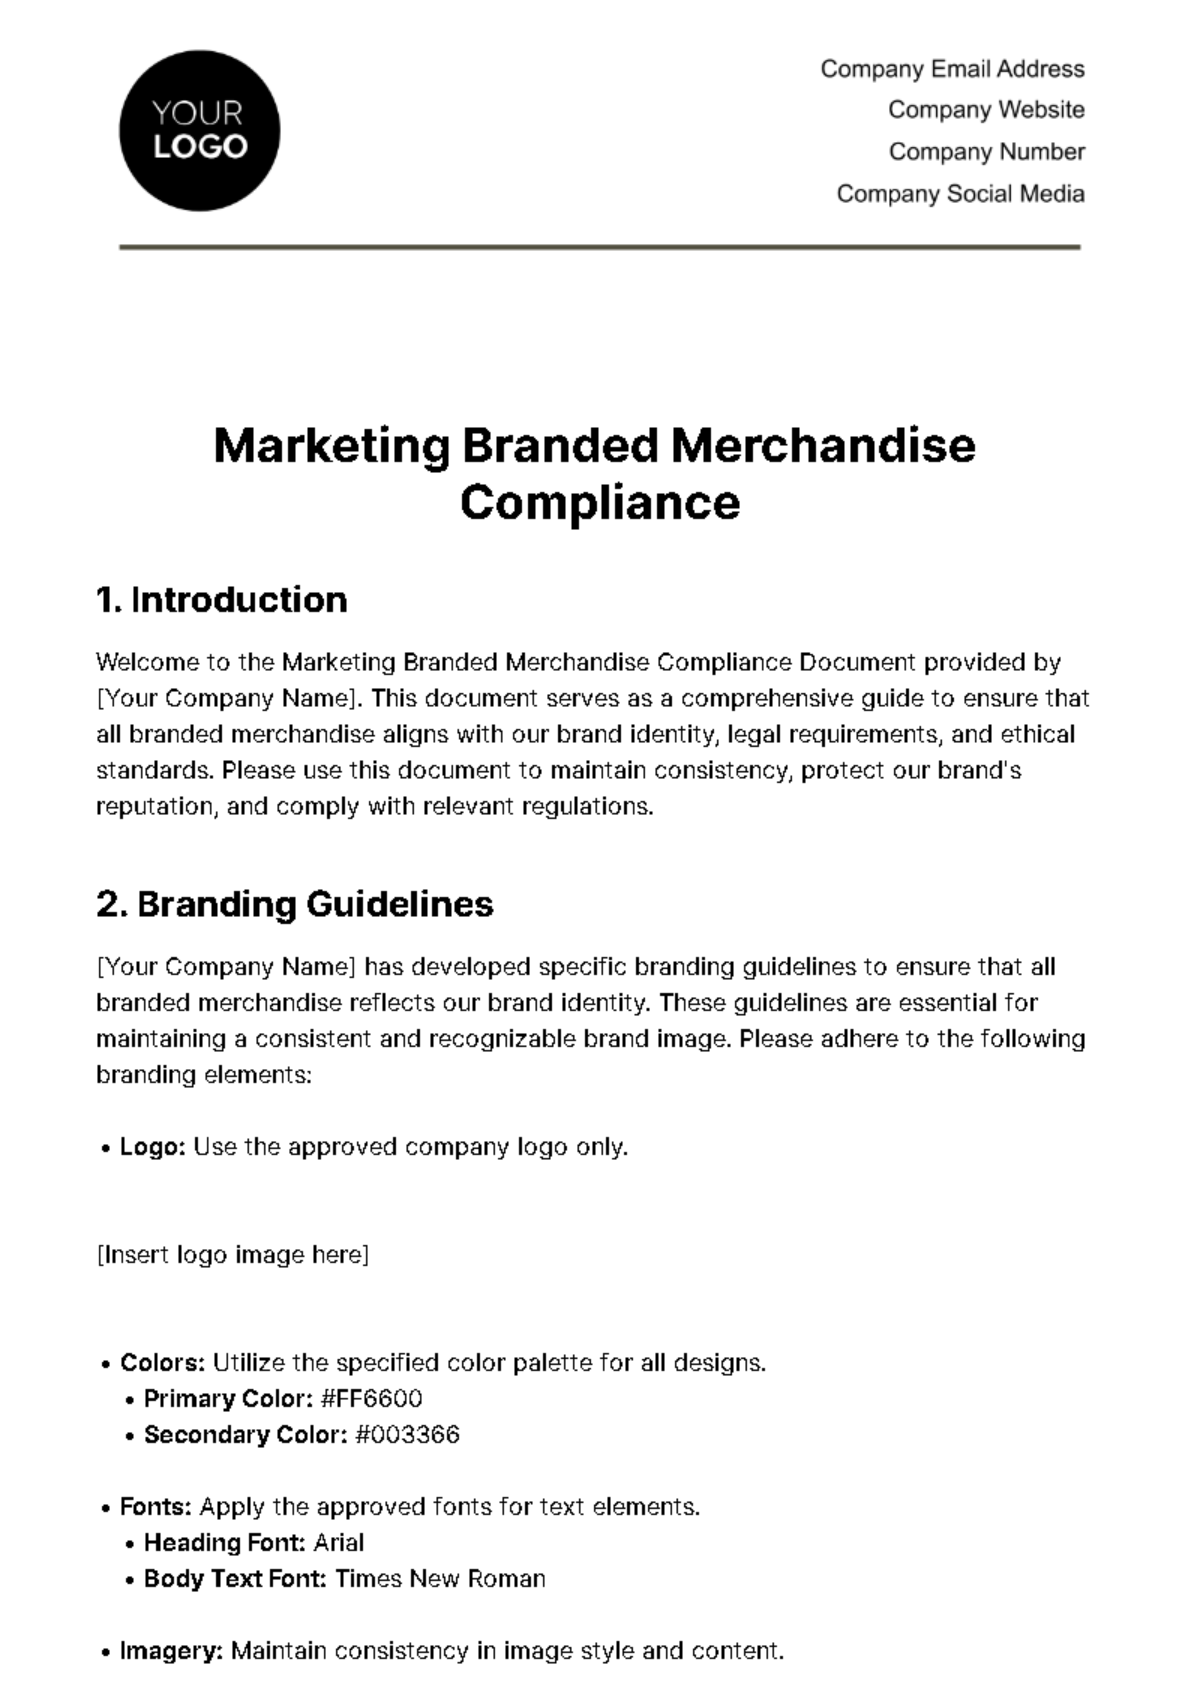 Free Marketing Branded Merchandise Compliance Template